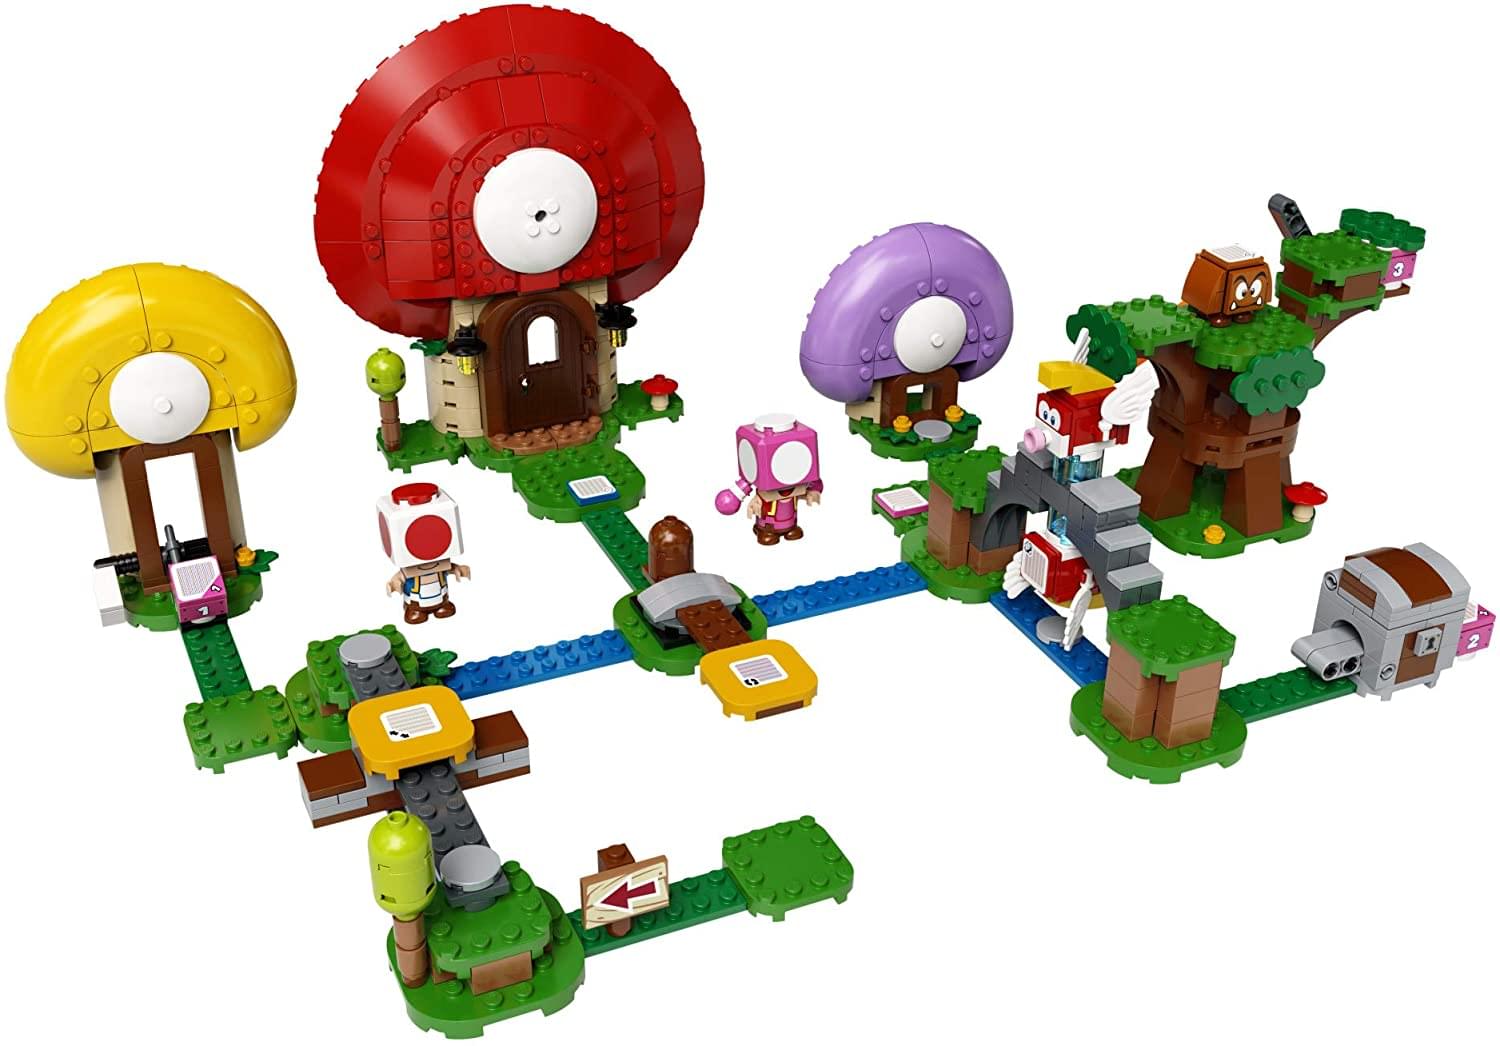 LEGO Super Mario Toads Treasure Hunt 71368 | 464 Piece Expansion Set